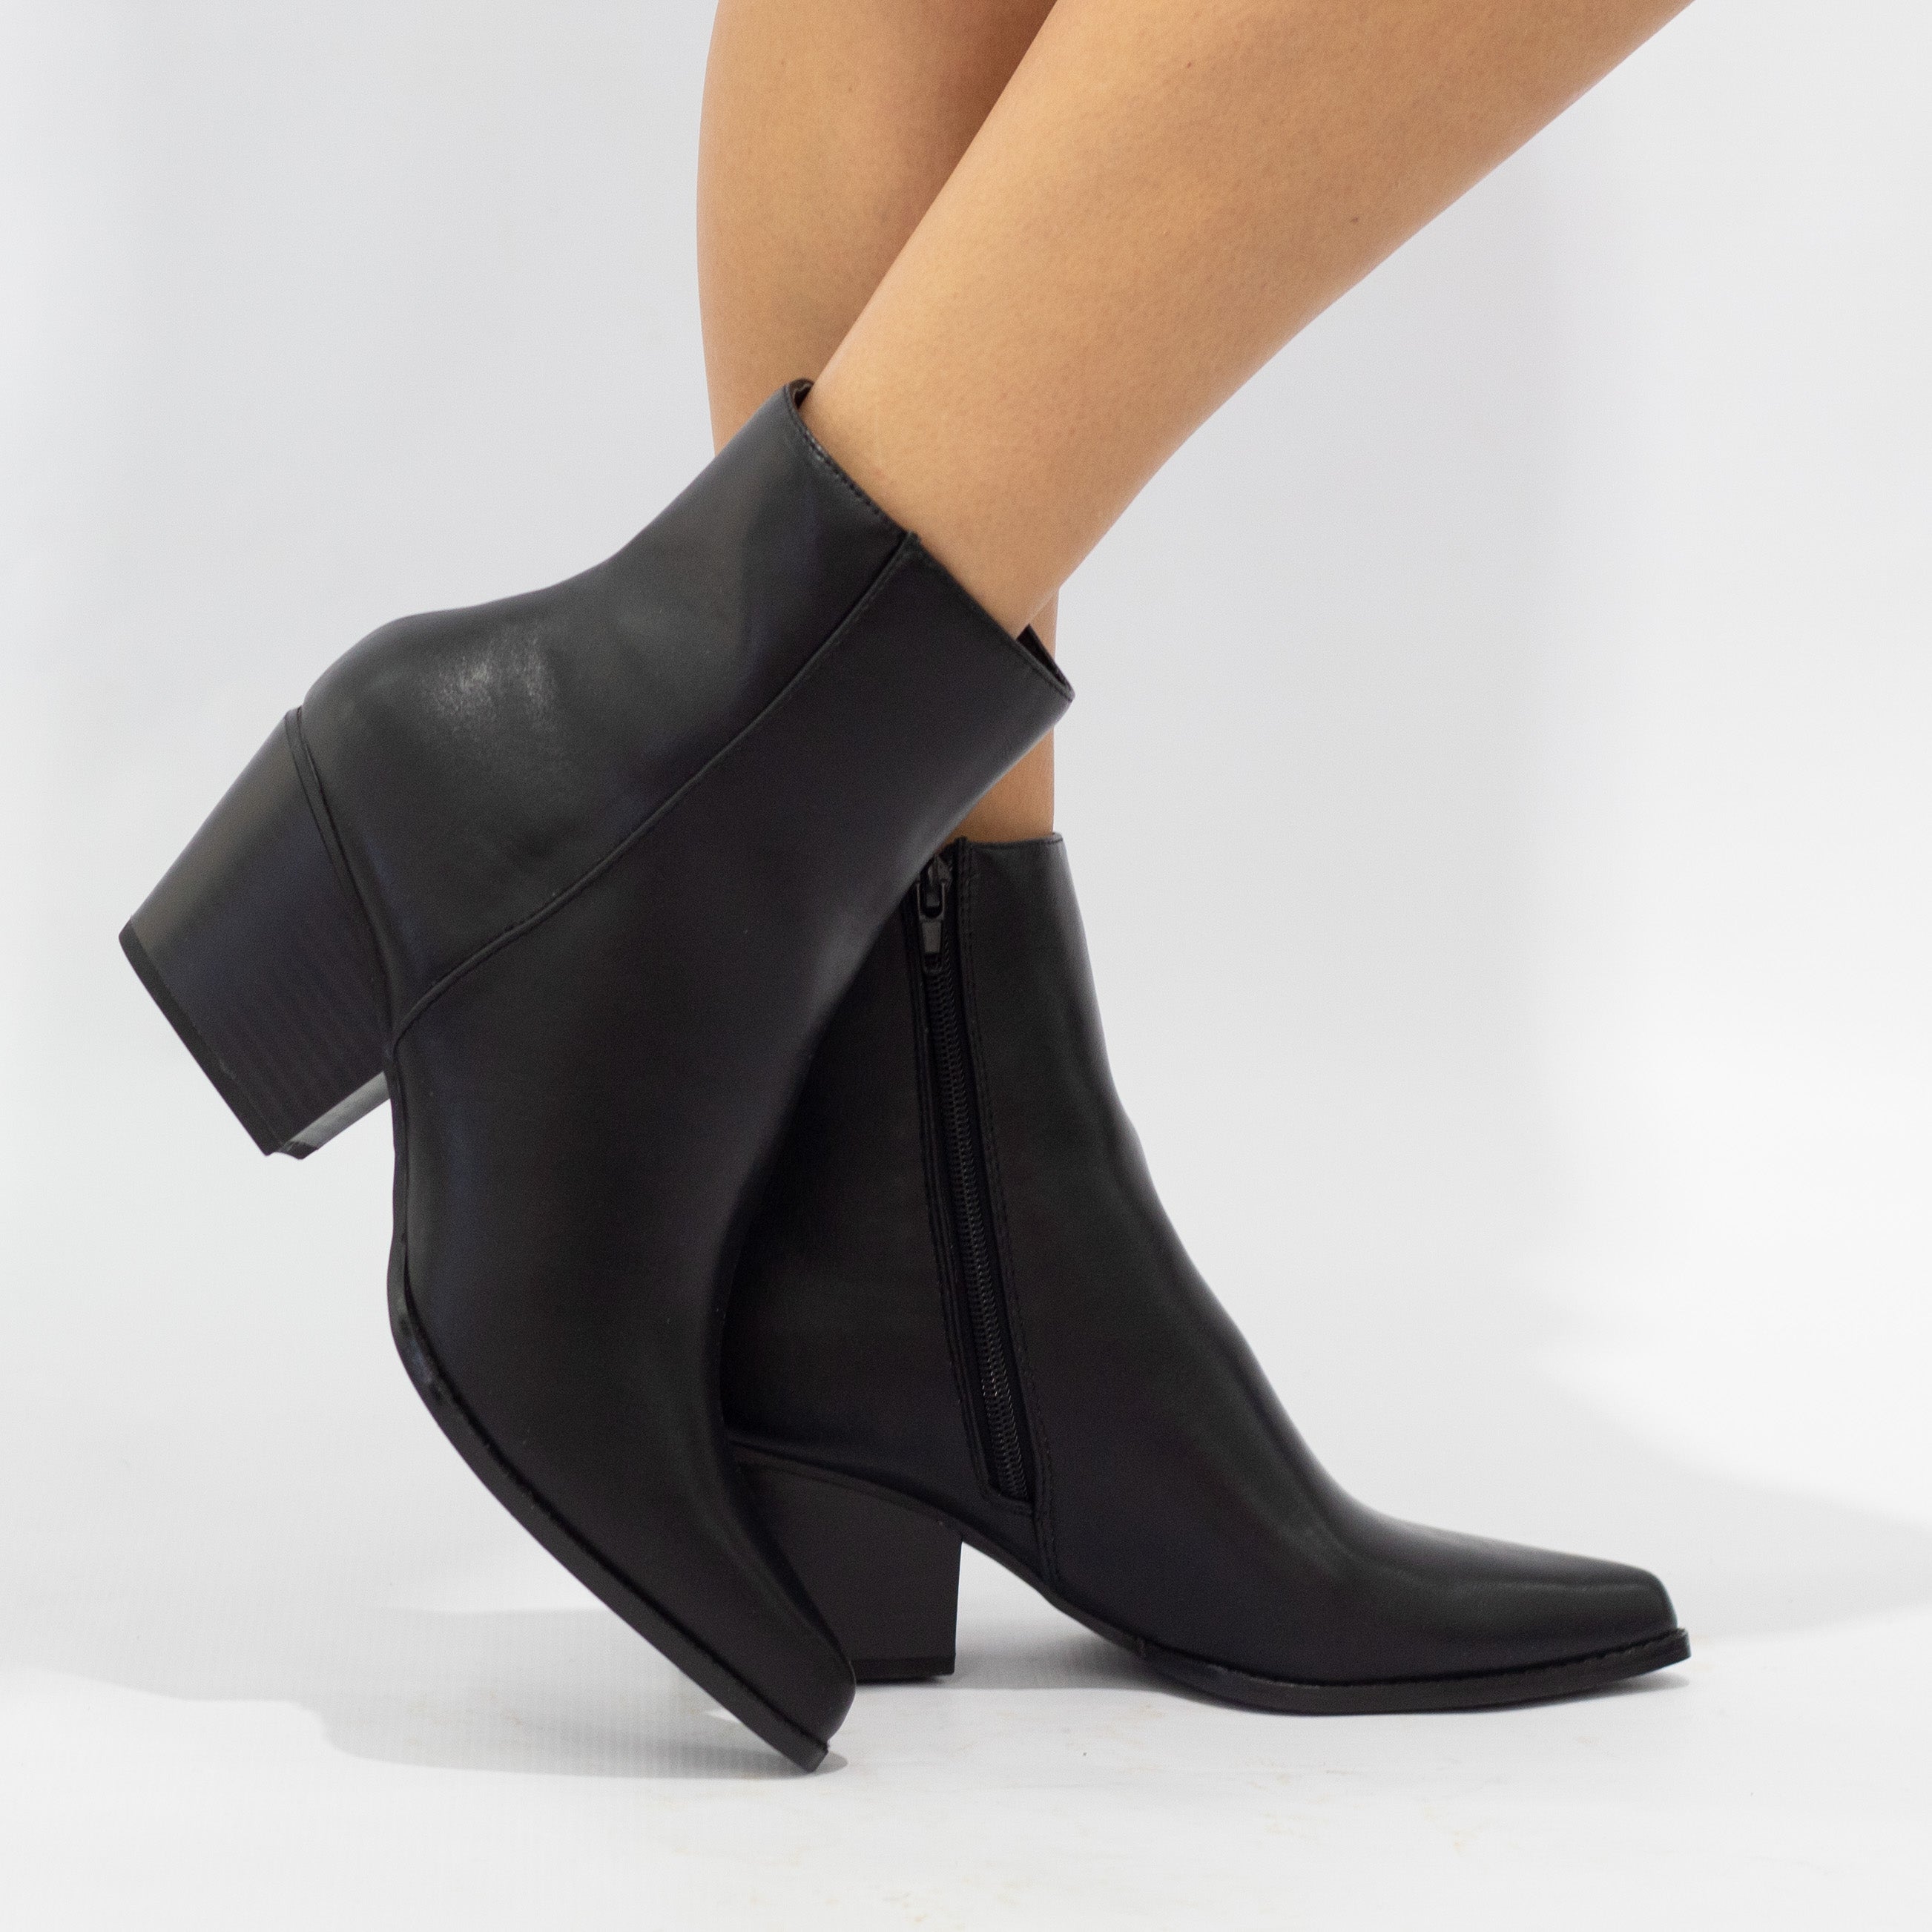 Noelle 6cm block heel LA08-18 PU ankle boot black